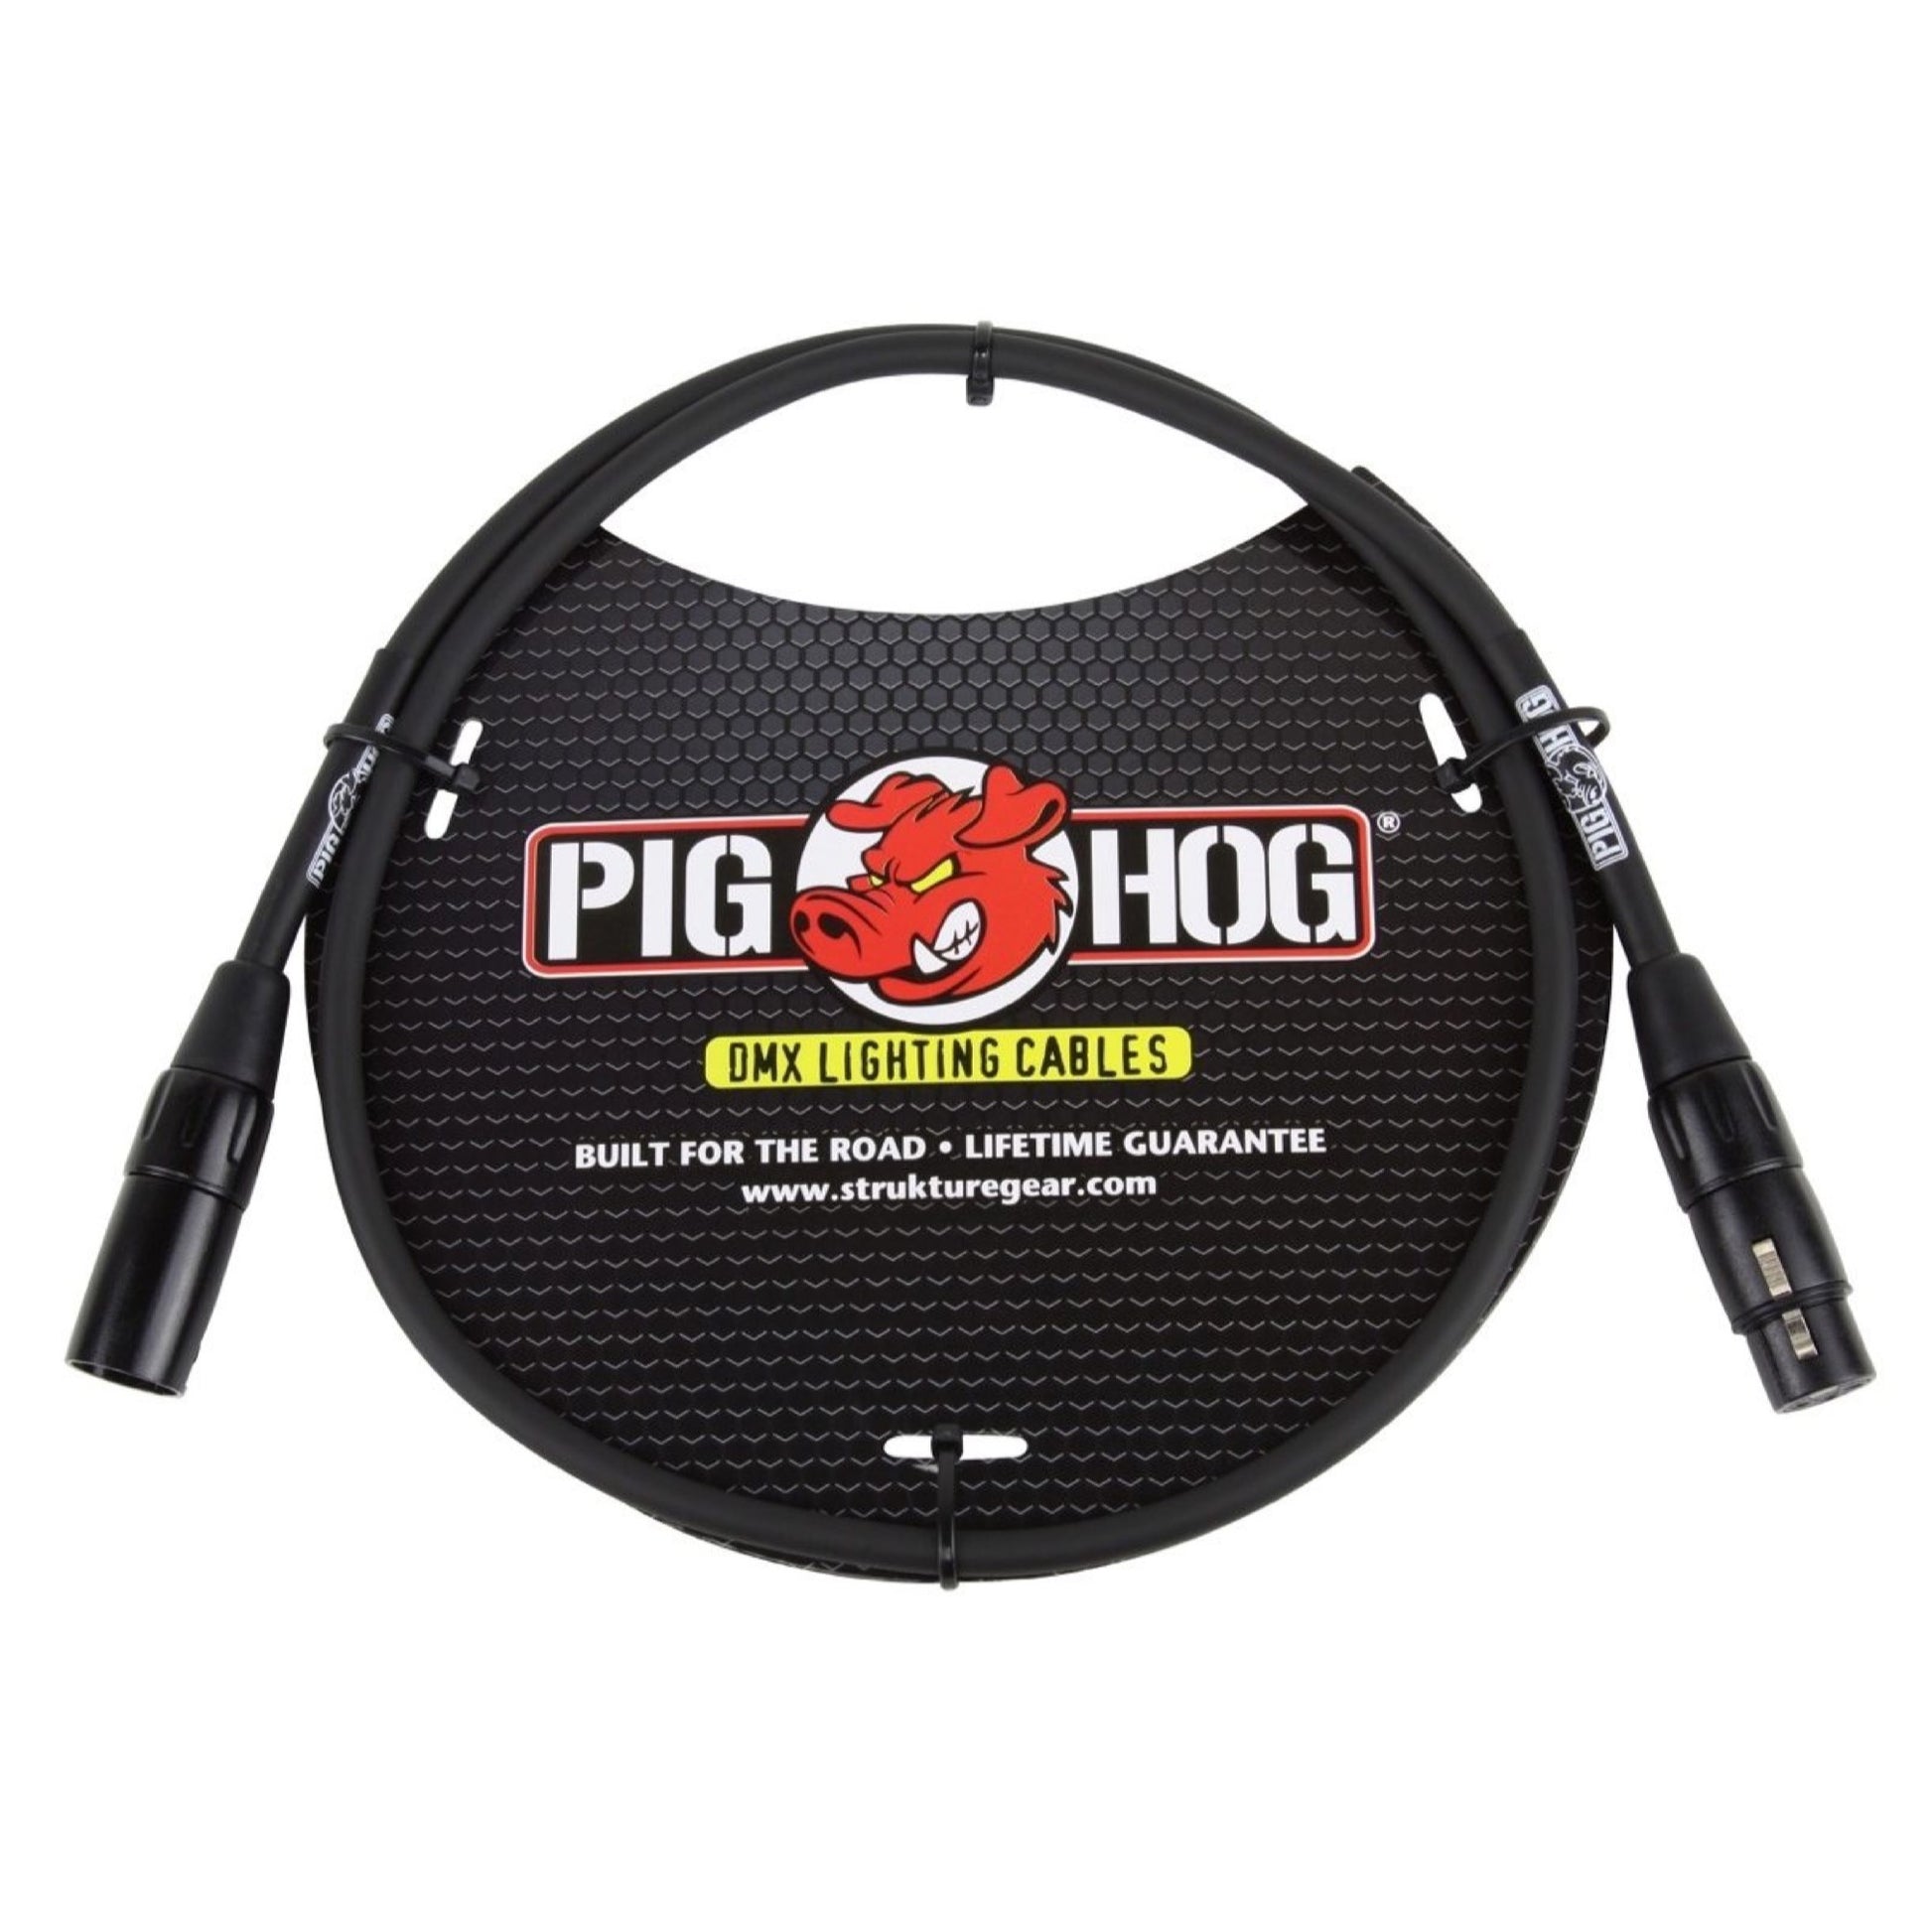 Pig Hog 3-Pin DMX Lighting Cable, 10 Foot